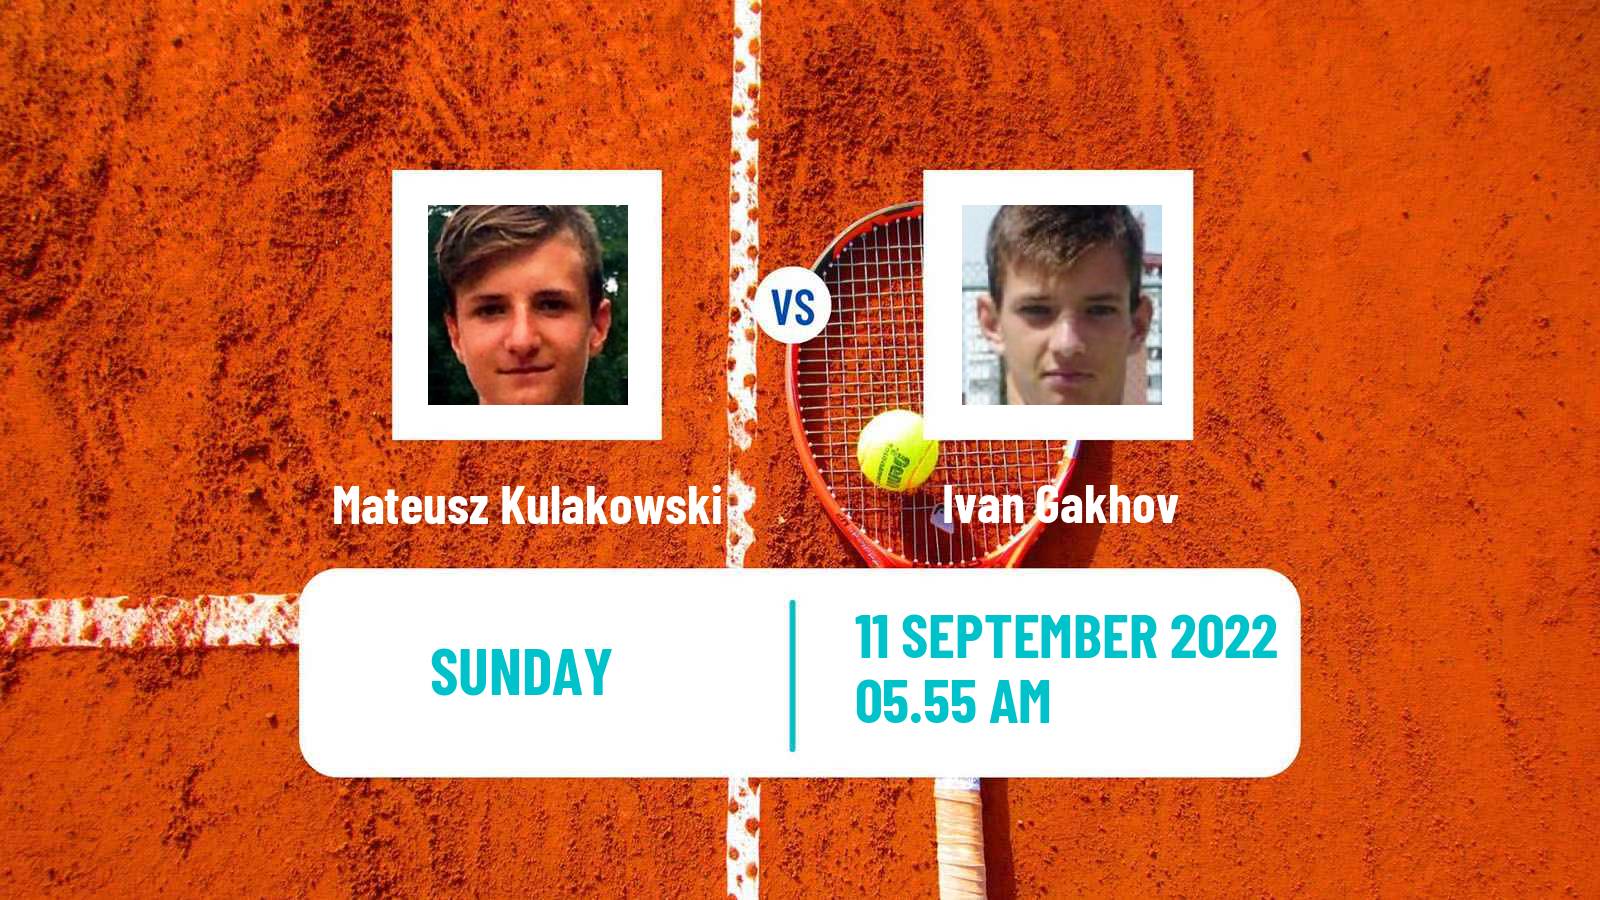 Tennis ATP Challenger Mateusz Kulakowski - Ivan Gakhov